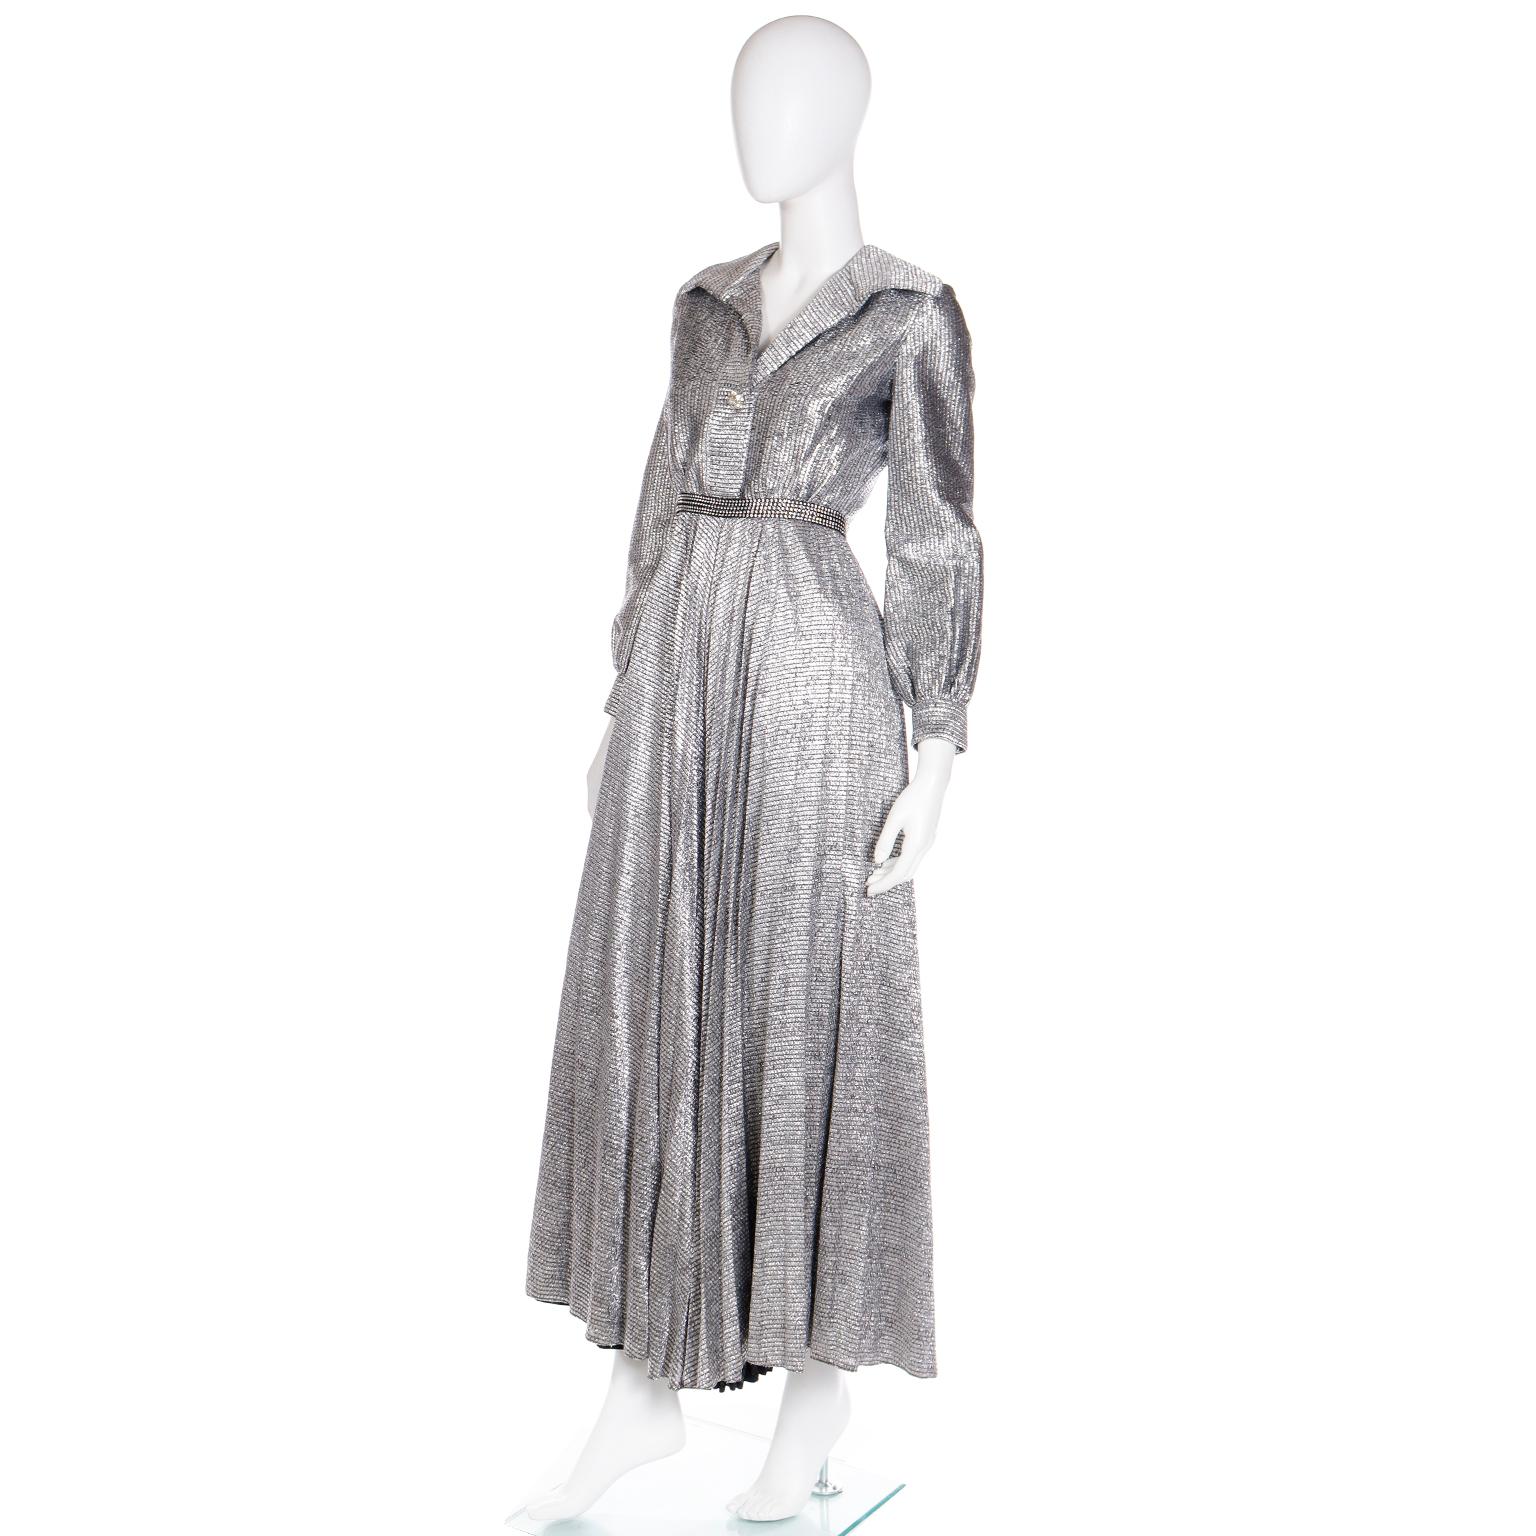 Vintage 1960s 1970s Silver Sparkle Palazzo Jumpsuit Evening Dress Alternative For Sale 7